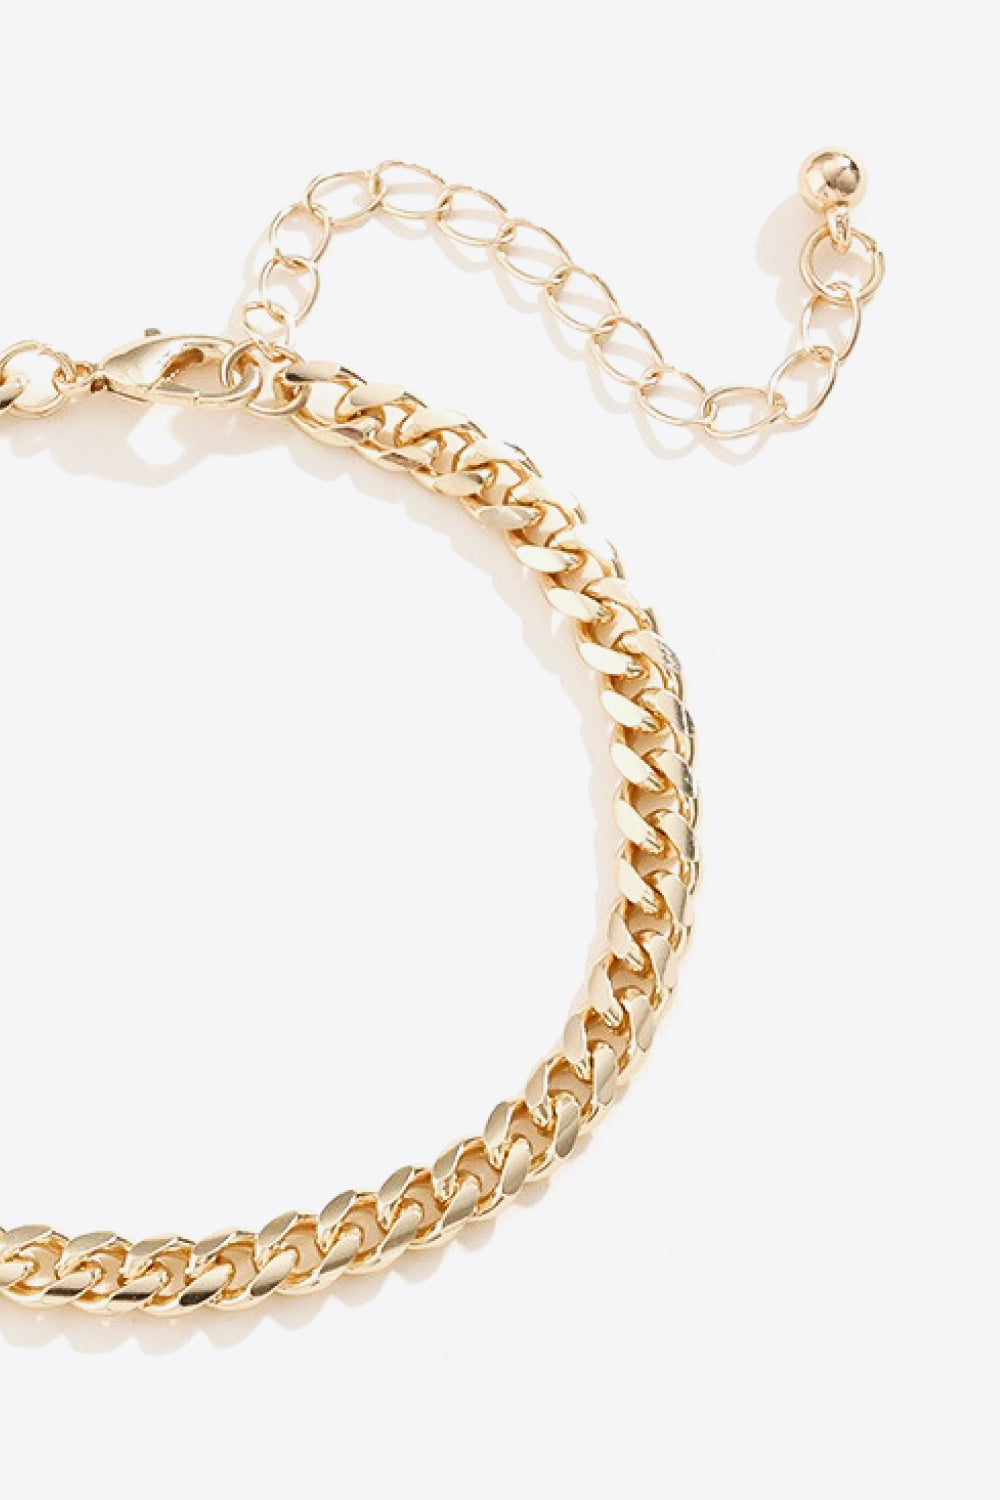 Curb Chain Copper Bracelet - Bracelets - FITGGINS